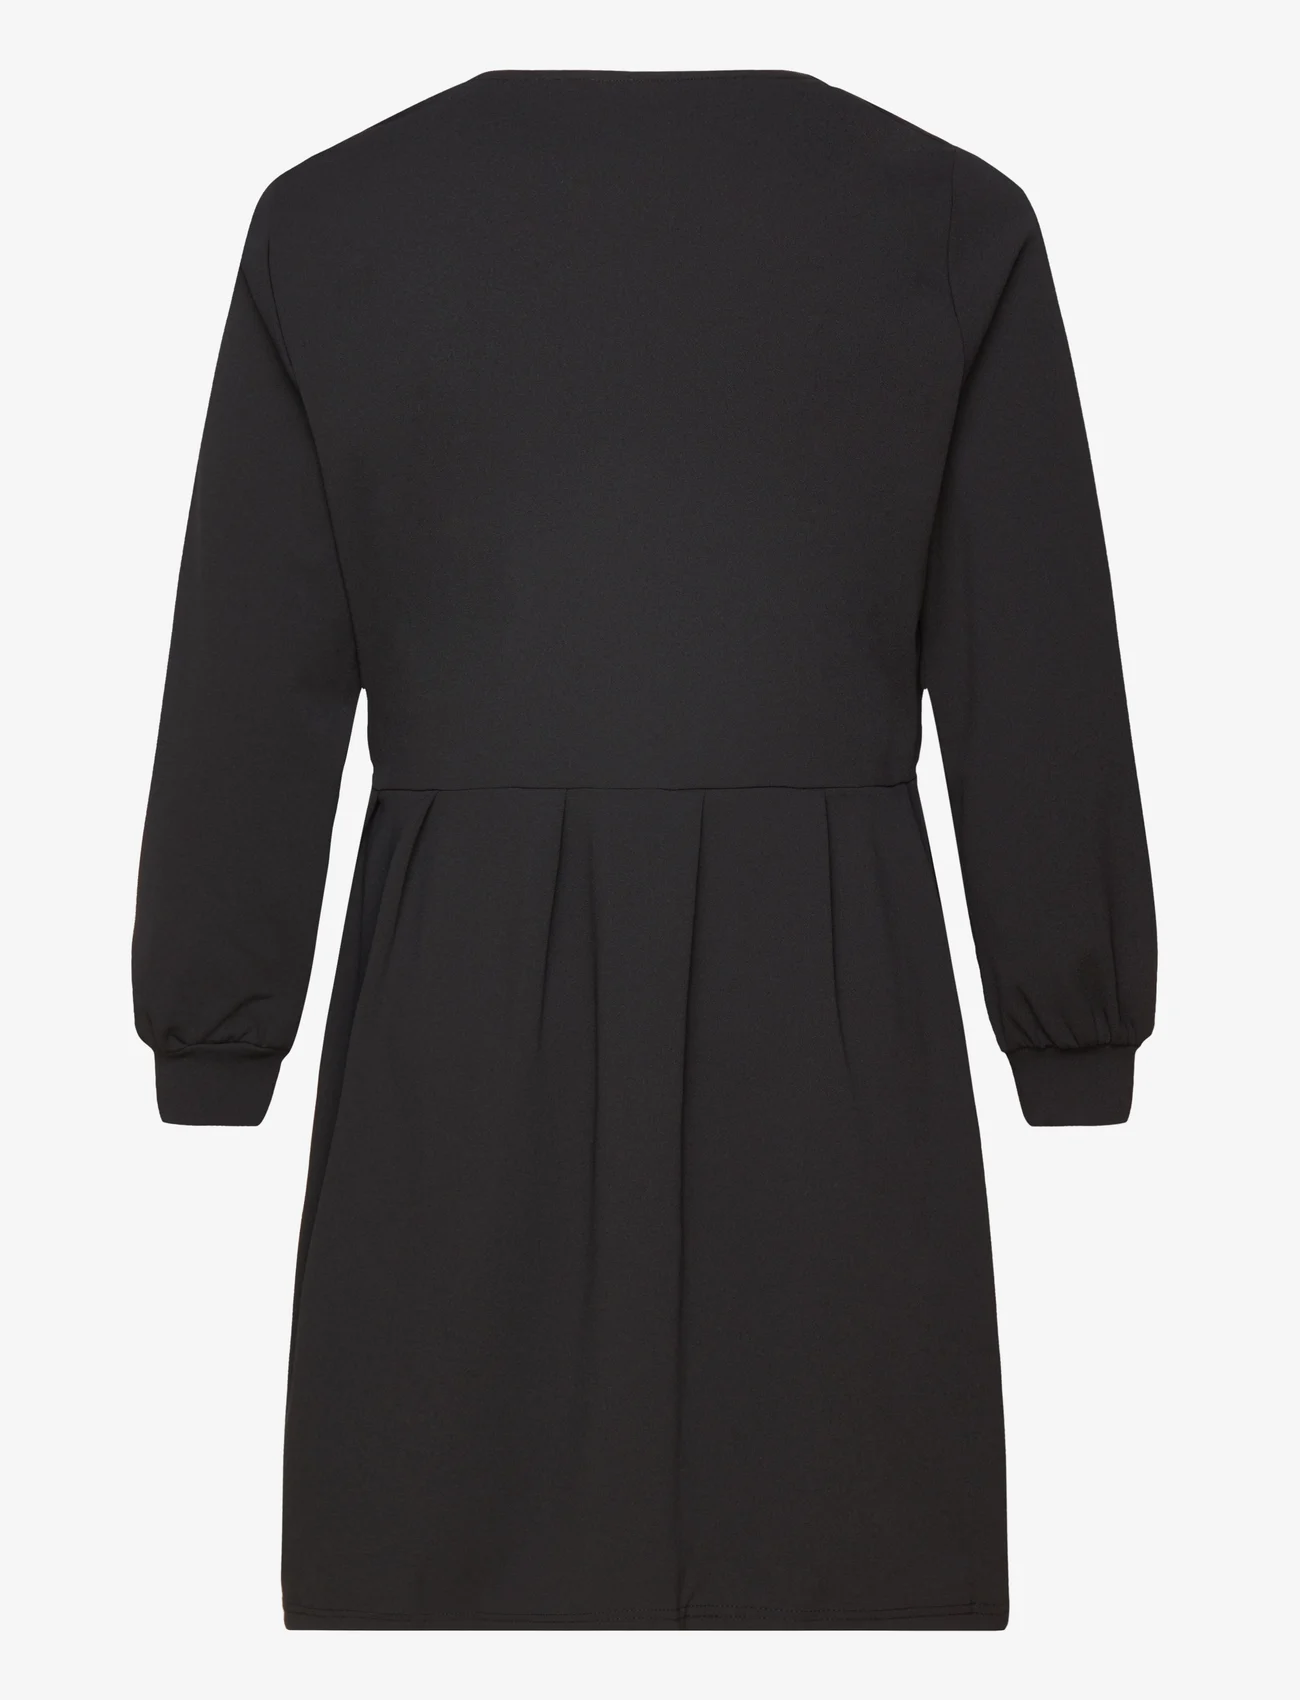 Zizzi - VLESLIE, L/S, ABK DRESS - short dresses - black - 1